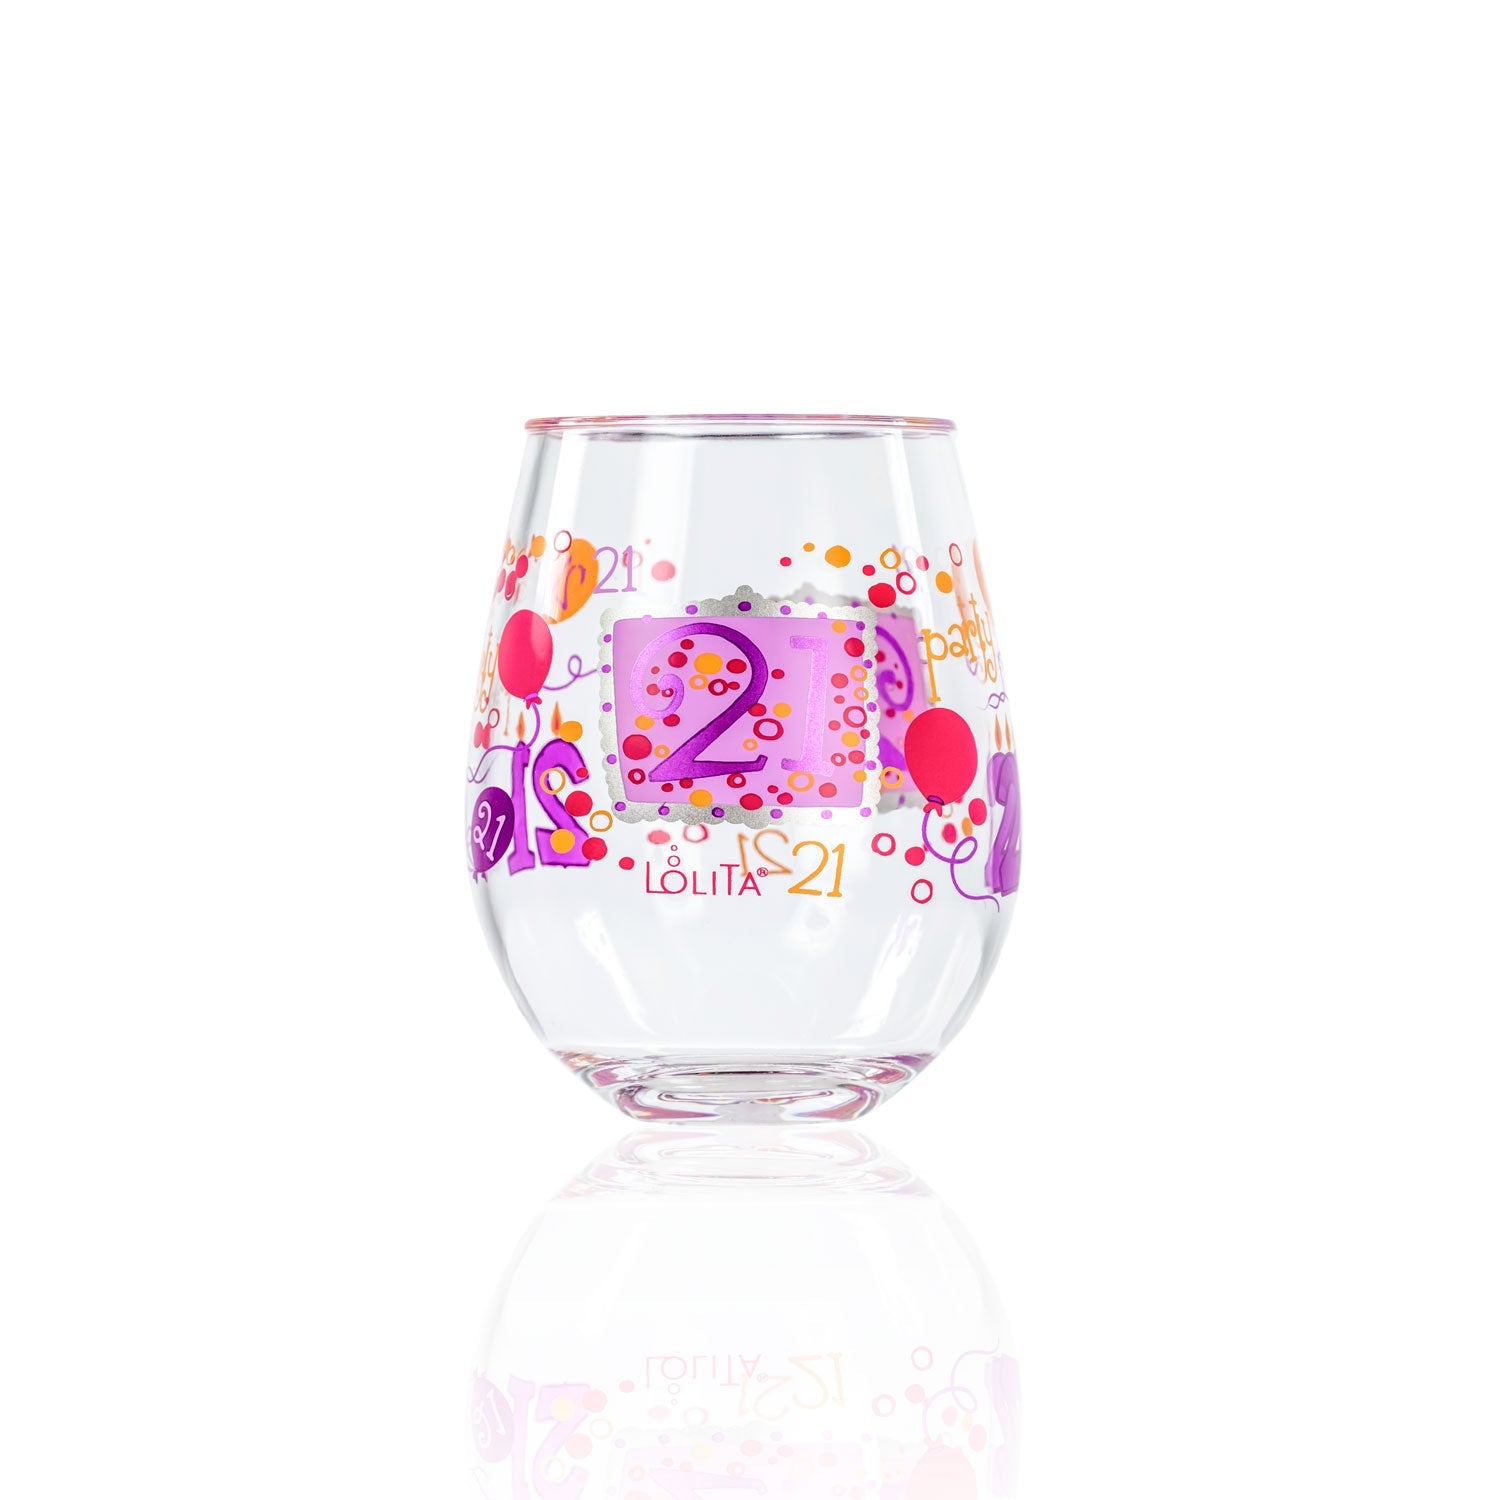 Merritt Designs Party to go by Lolita 21st Birthday Acrylic Stemless Wine Glass